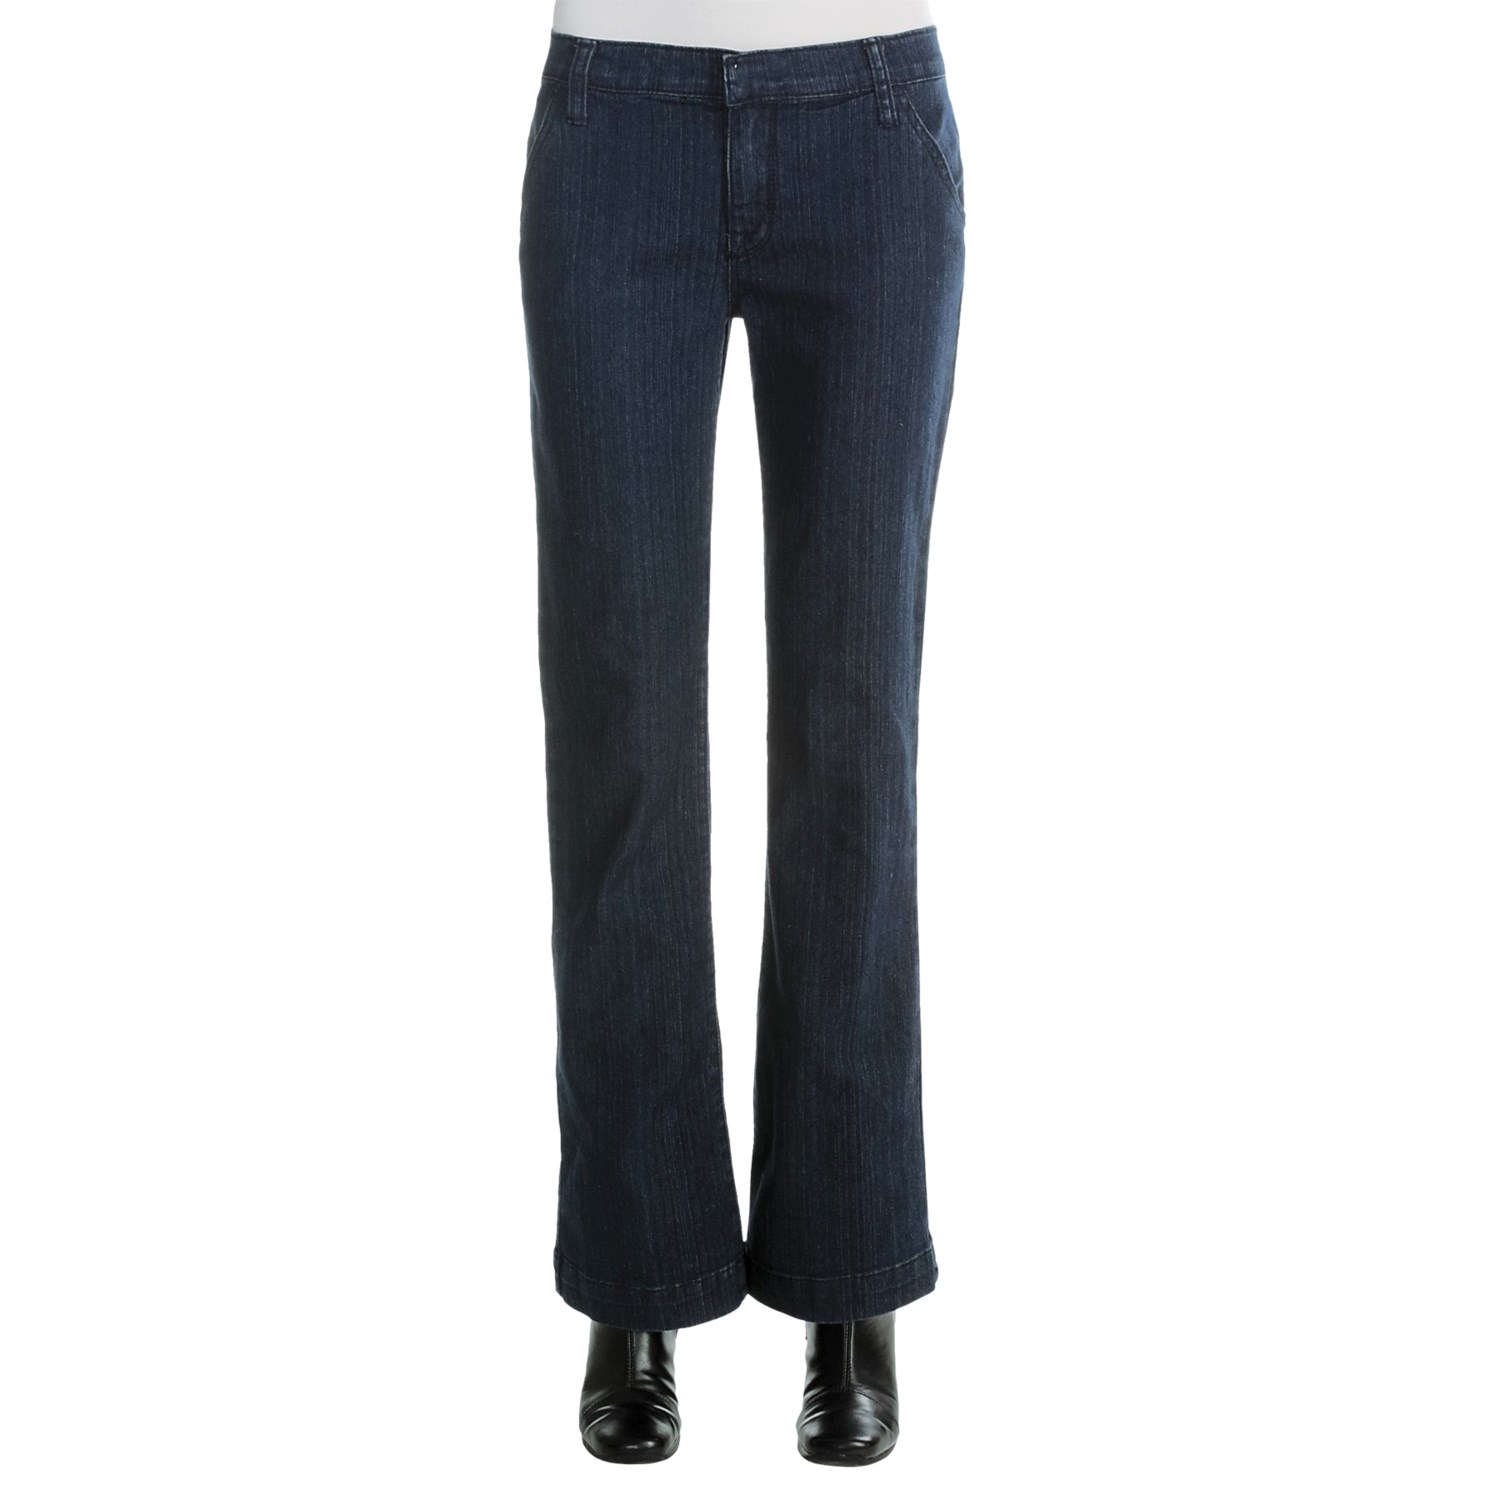 Stretch Denim Dress Jeans (For Women) 2986A - Save 59%